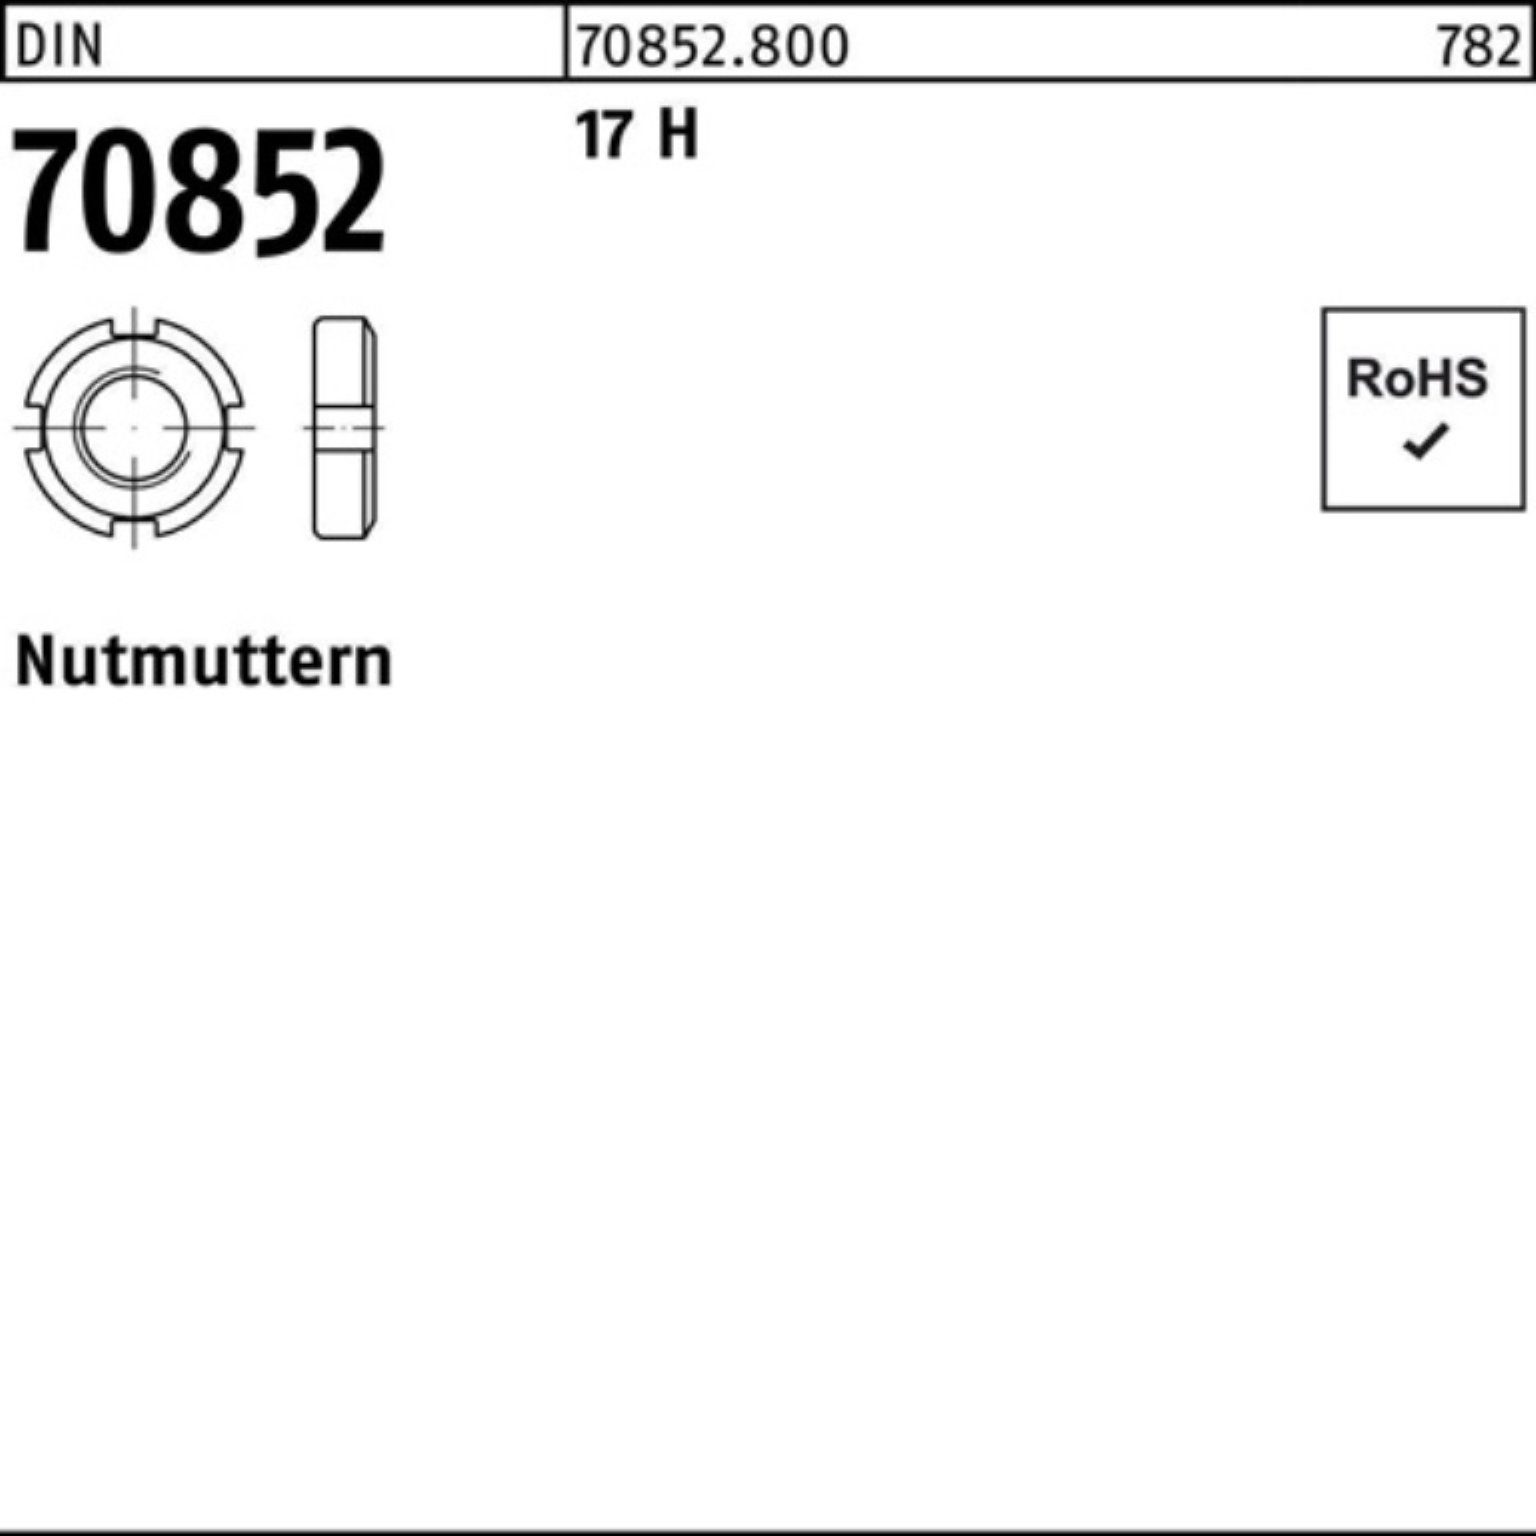 Reyher Nutmutter 100er Pack Nutmutter 17 Stück 70852 M24x DIN 70852 10 1,5 17 H H DIN